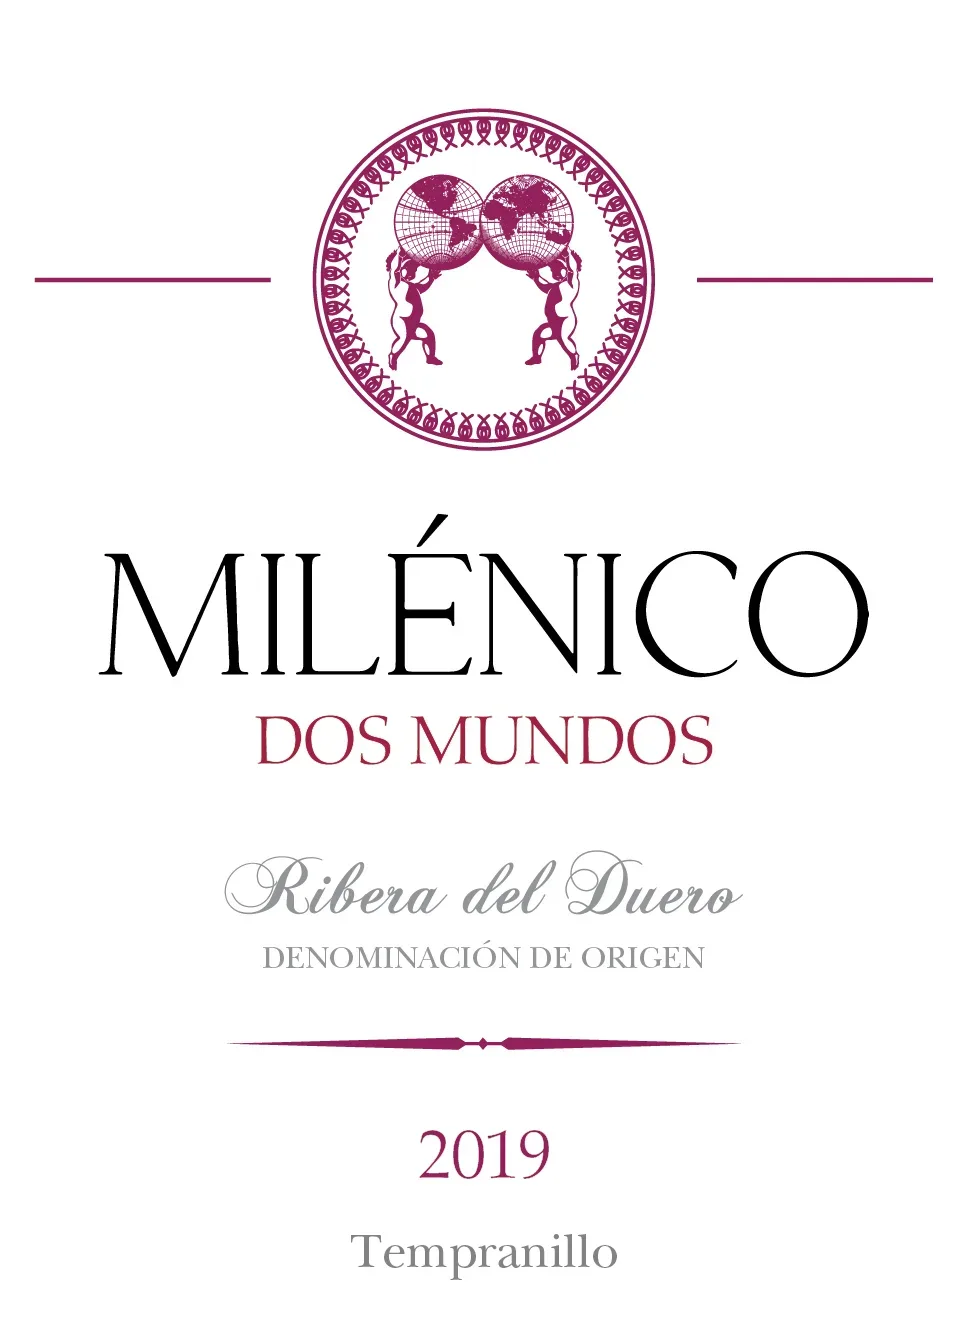 Milenico Dos Mundos Ribera del Duero front label